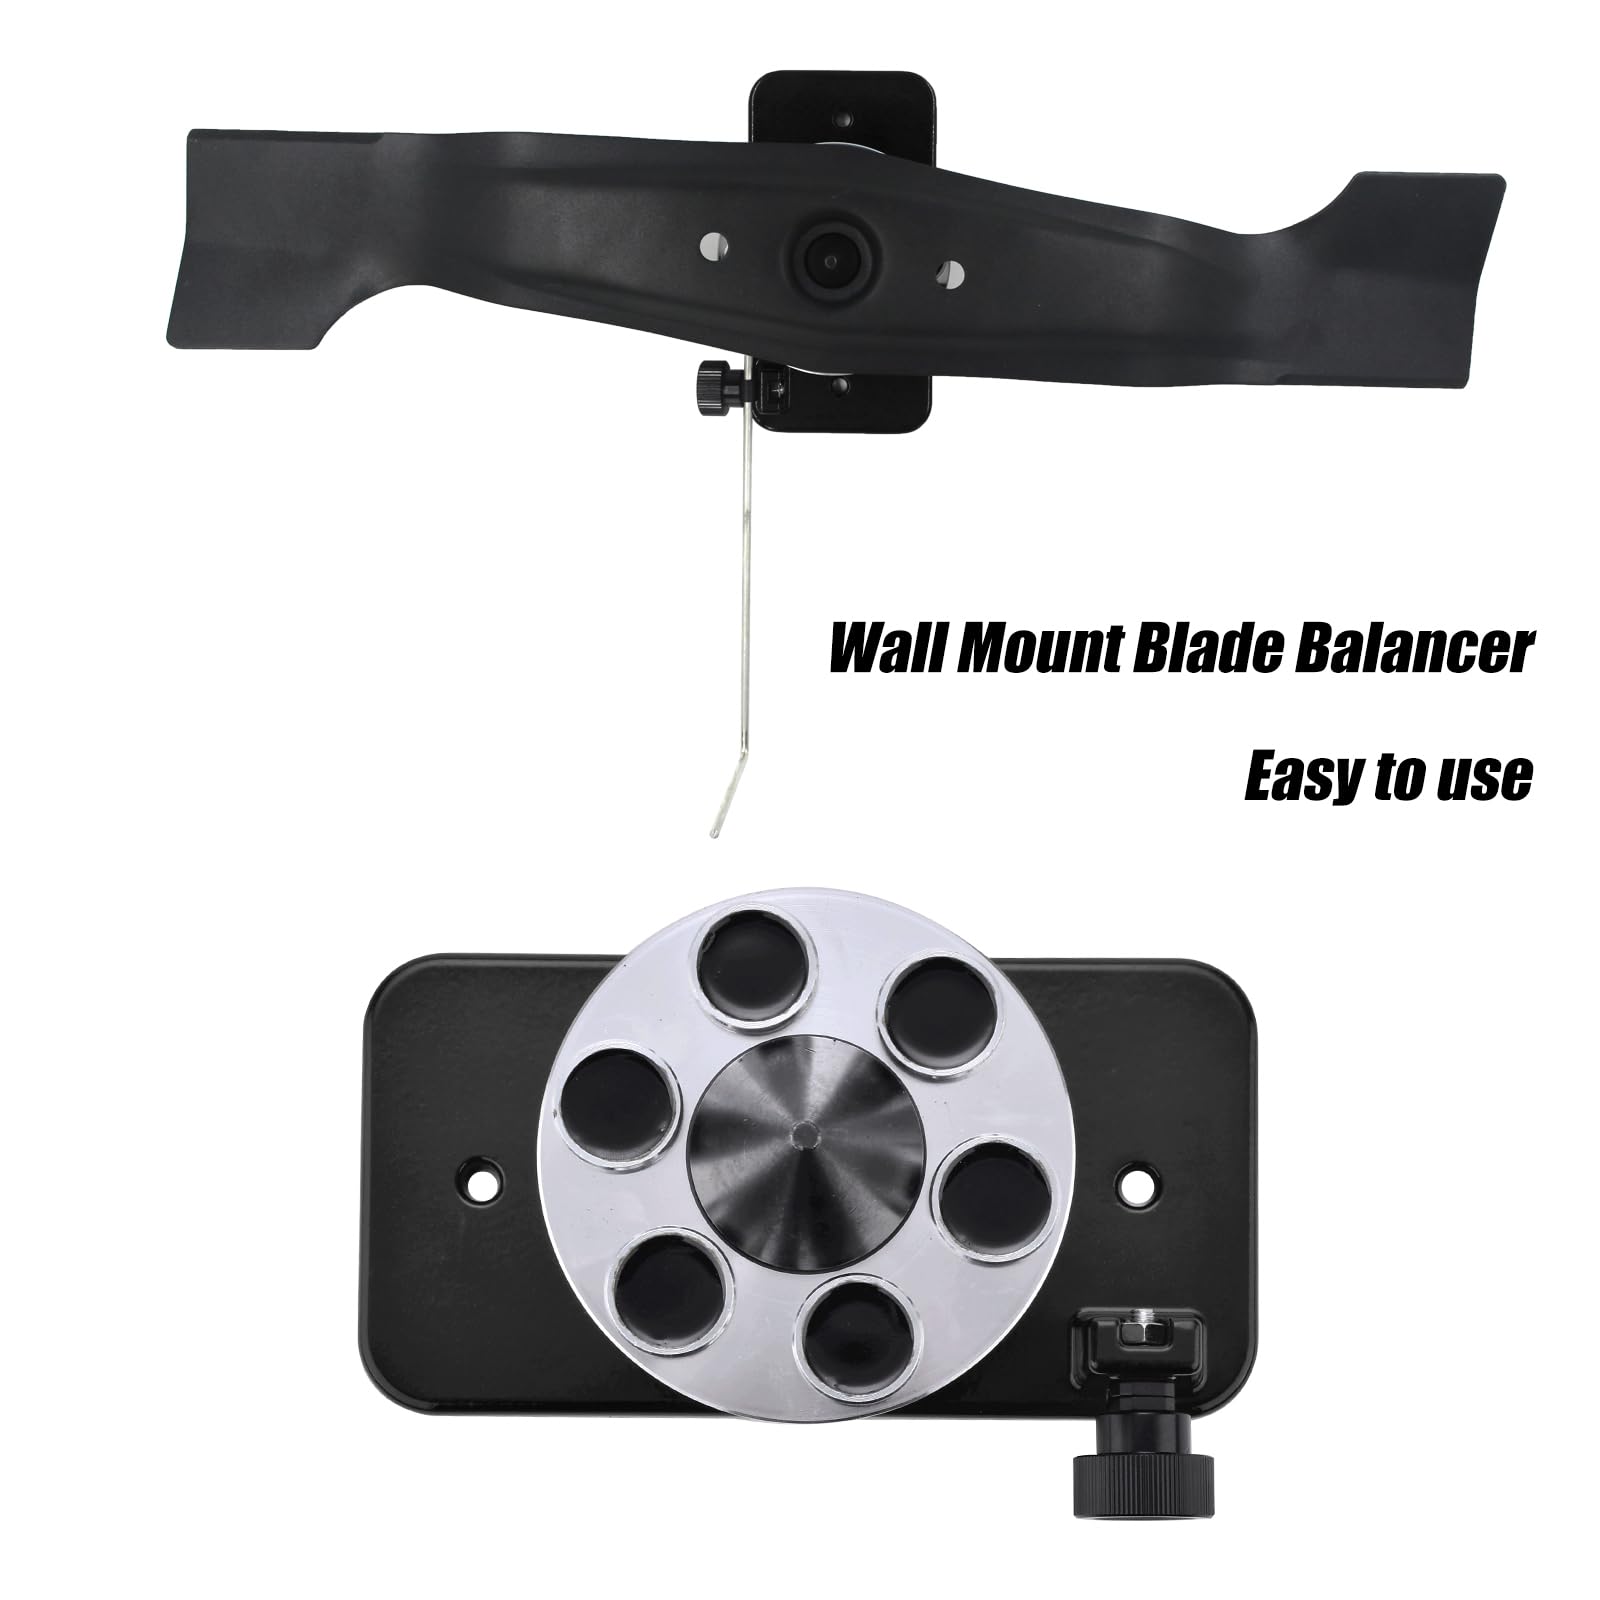 GSTP Lawn Mower Blade Balancer Replaces 42-047 339075B Magnetic Wall Mount Blade Balancer